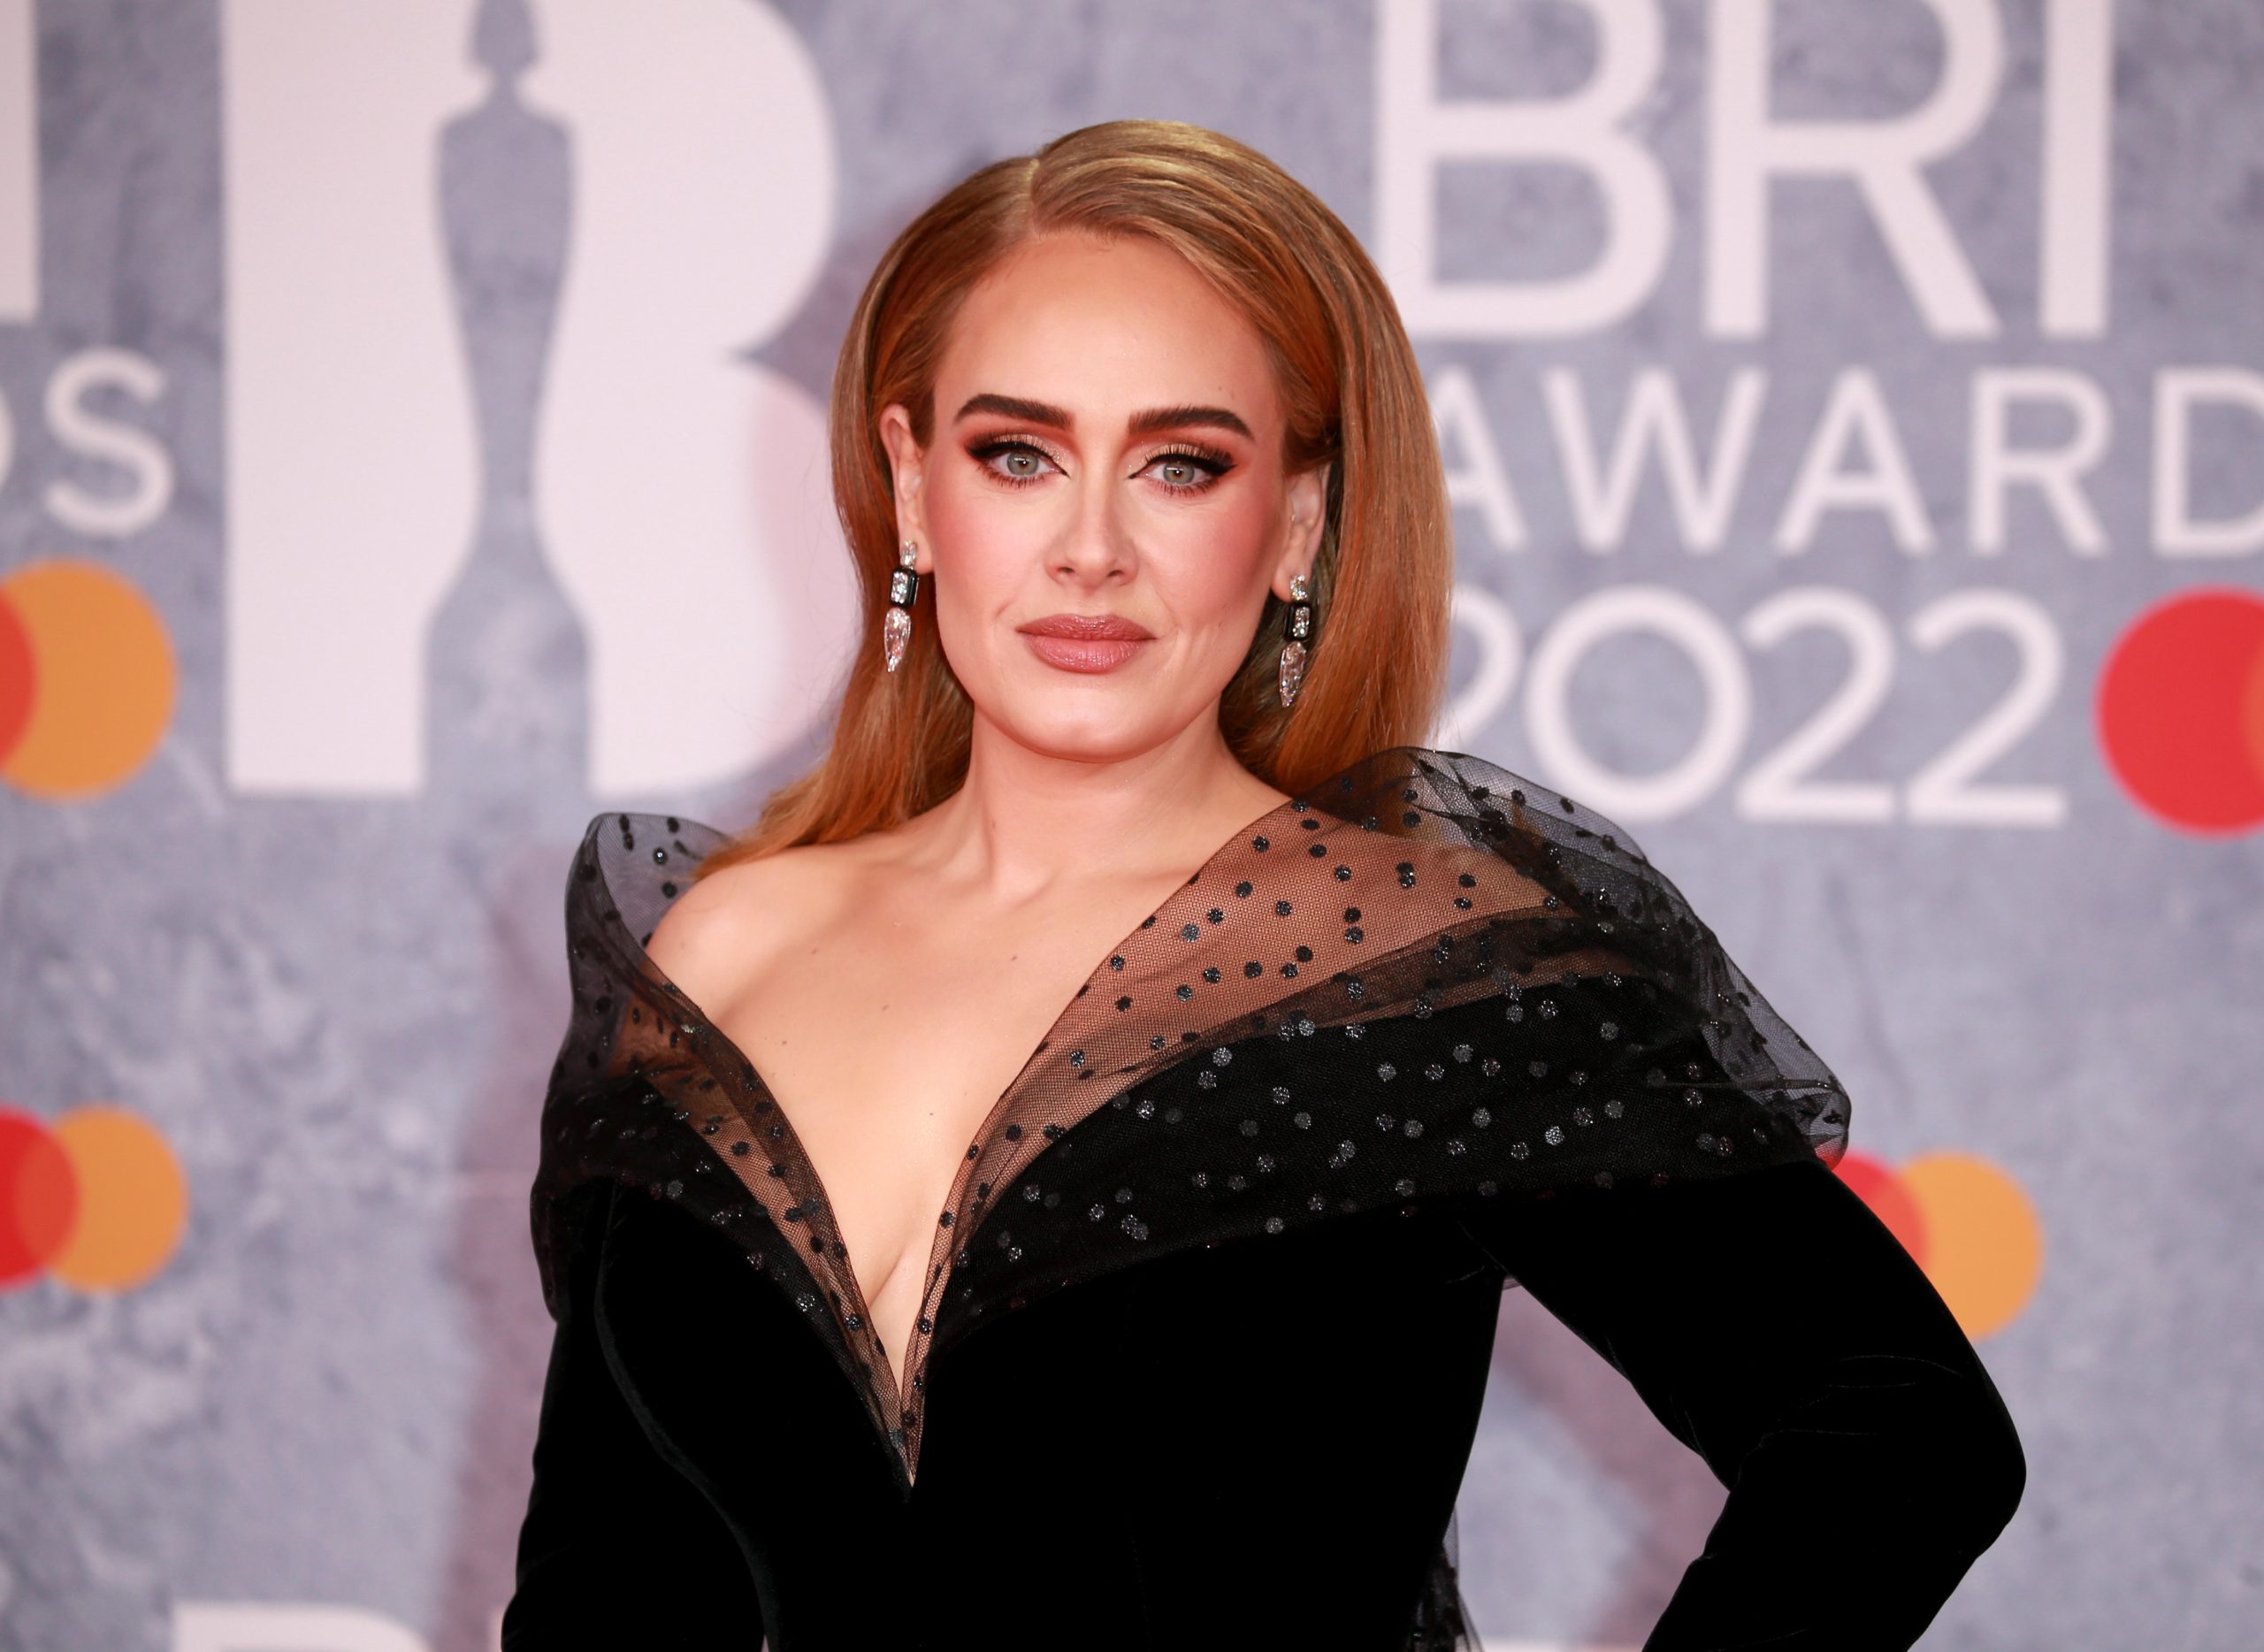 Adele-ve into pop singer’s guilt over cancelled Las Vegas residency